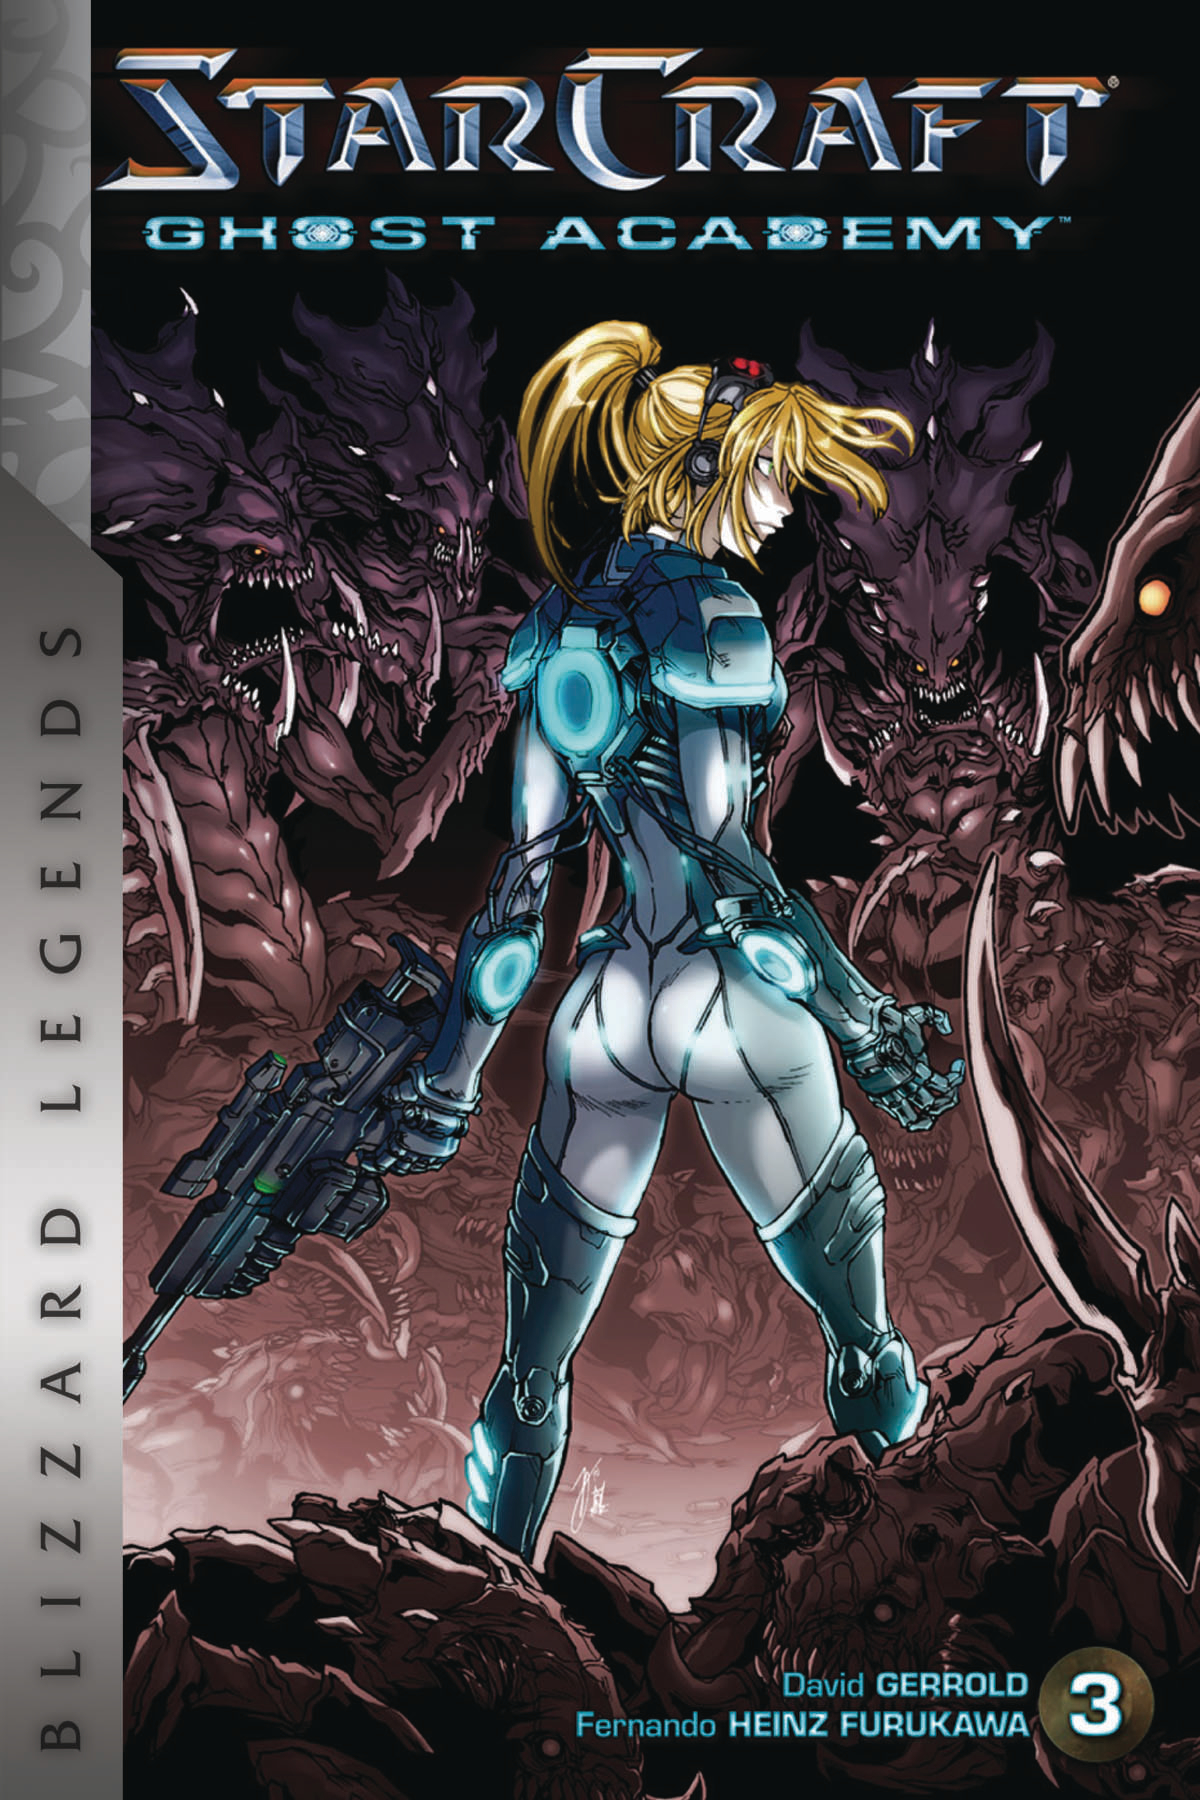 Starcraft Ghost Academy Graphic Novel Volume 3